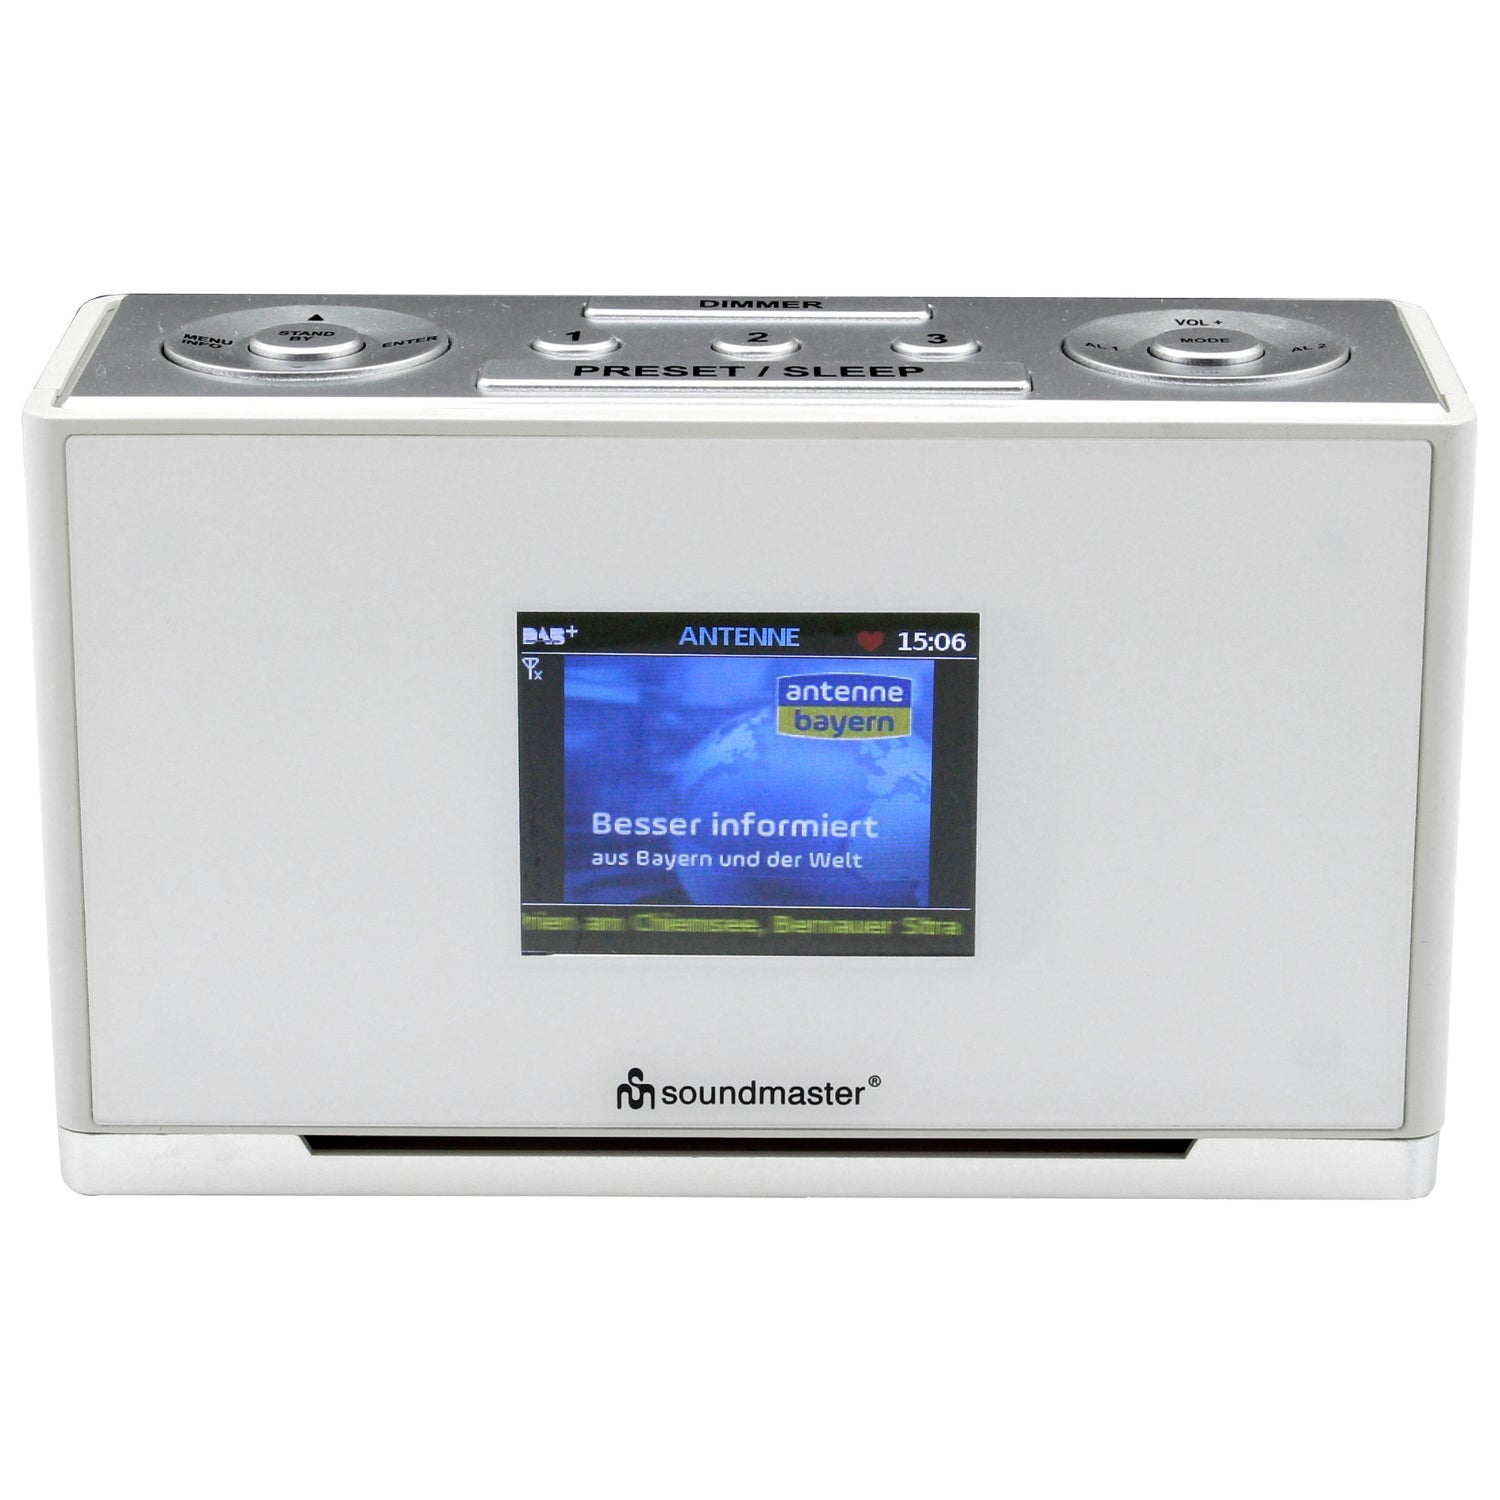 Soundmaster UR240WE DAB+ FM clock radio with color display